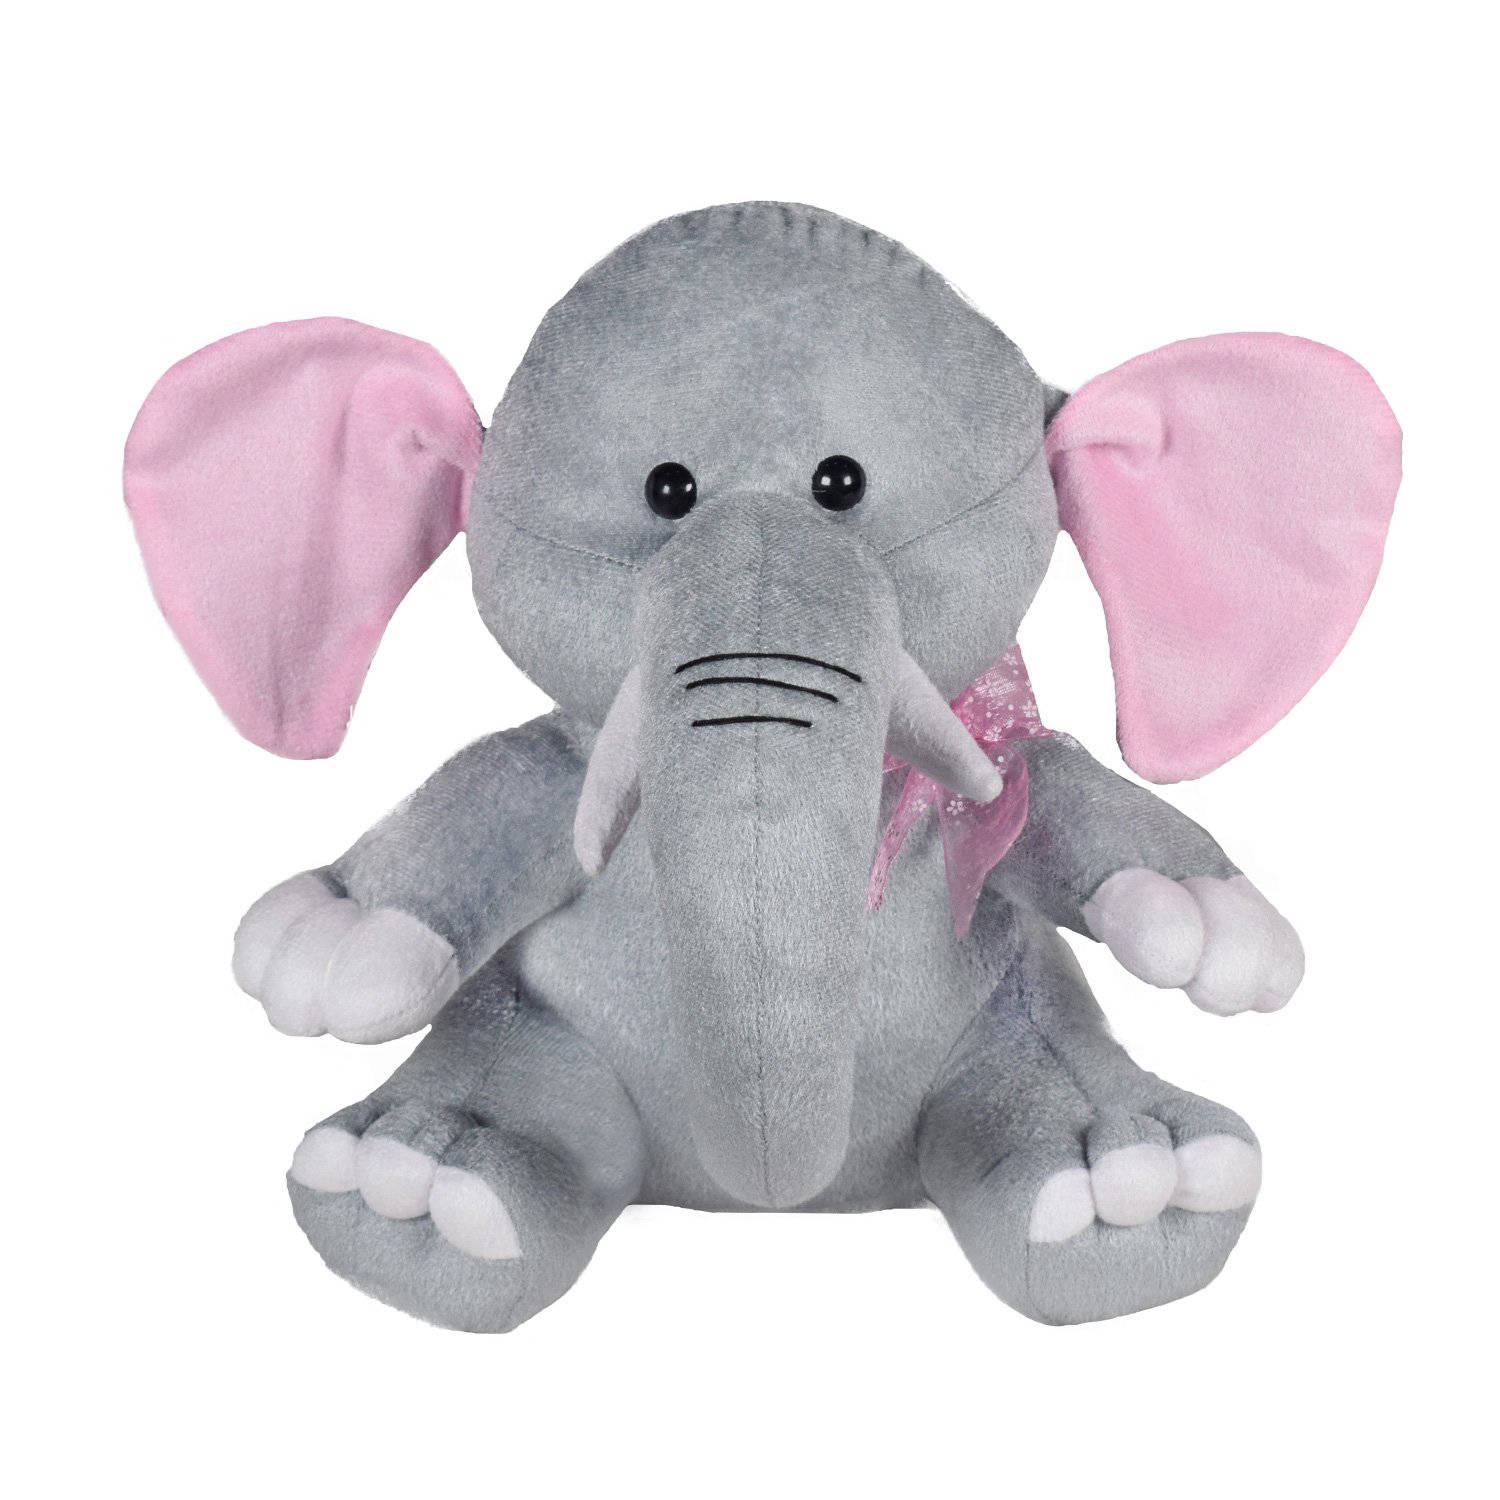 Caption: Cute And Cuddly Giant Elephant Beanie Boos Toy